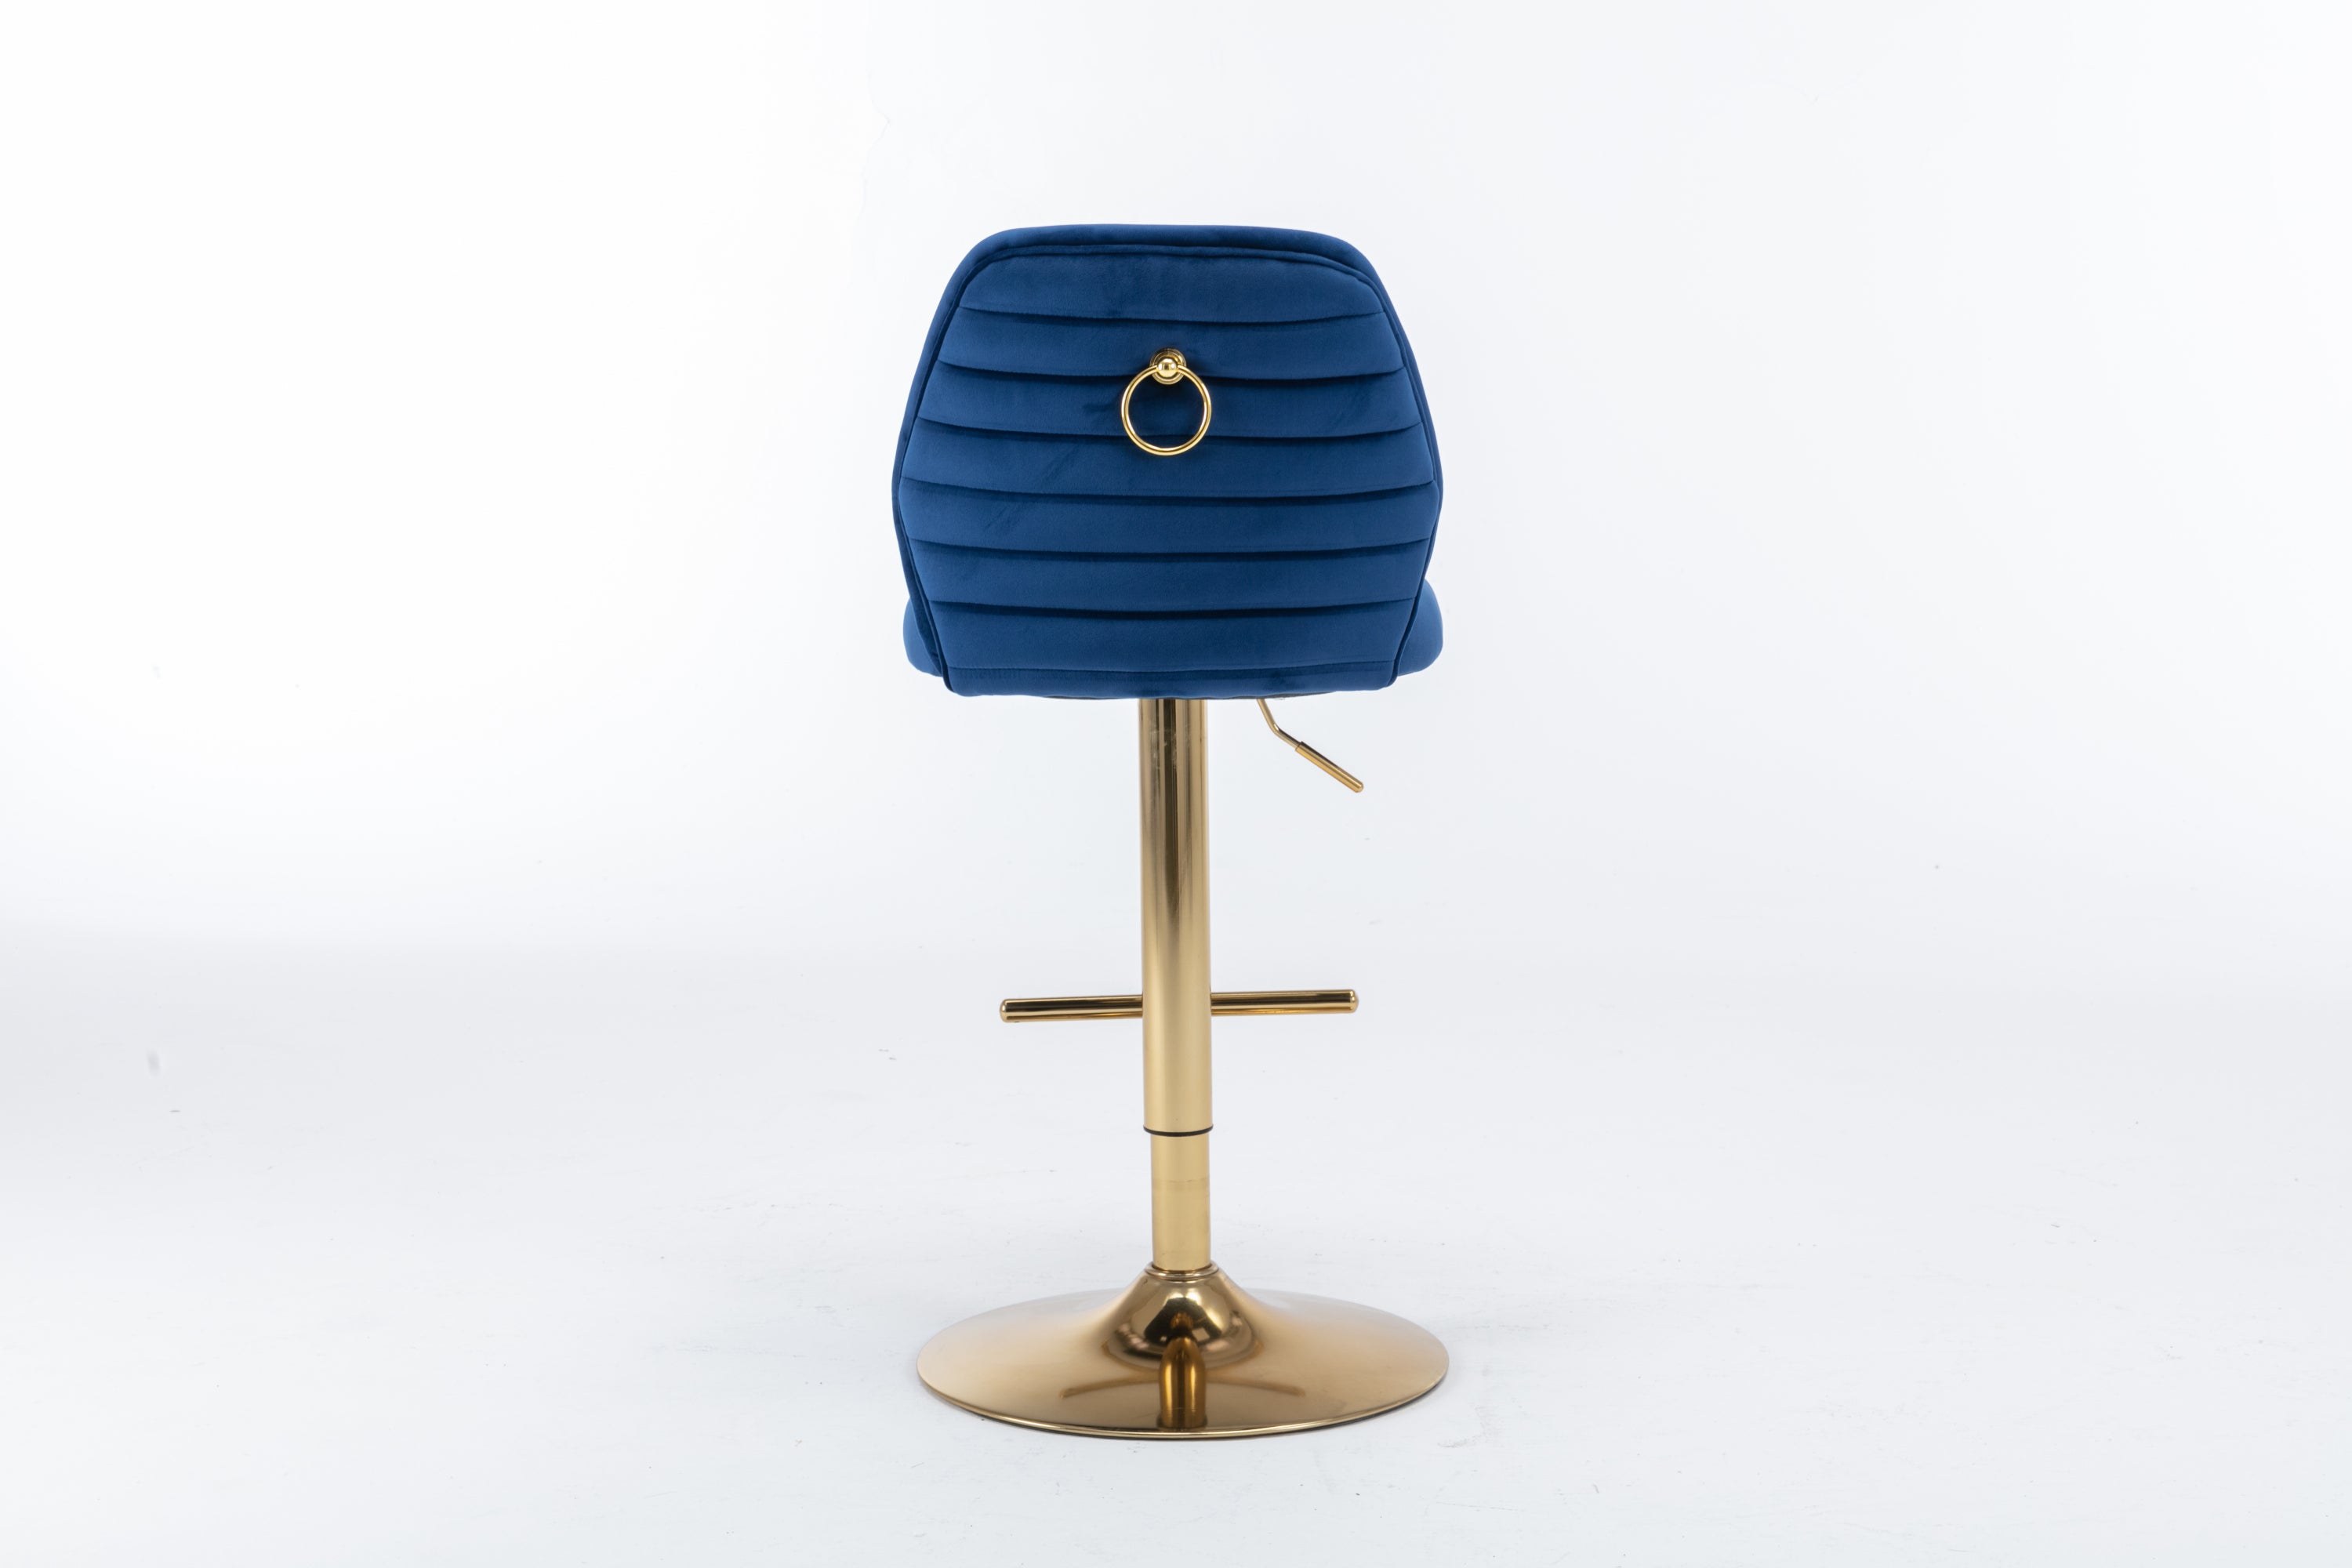 Modern Swivel Bar Stools Chair Adjustable (Set of 2) - Chrome Golden Base/ Navy Blue